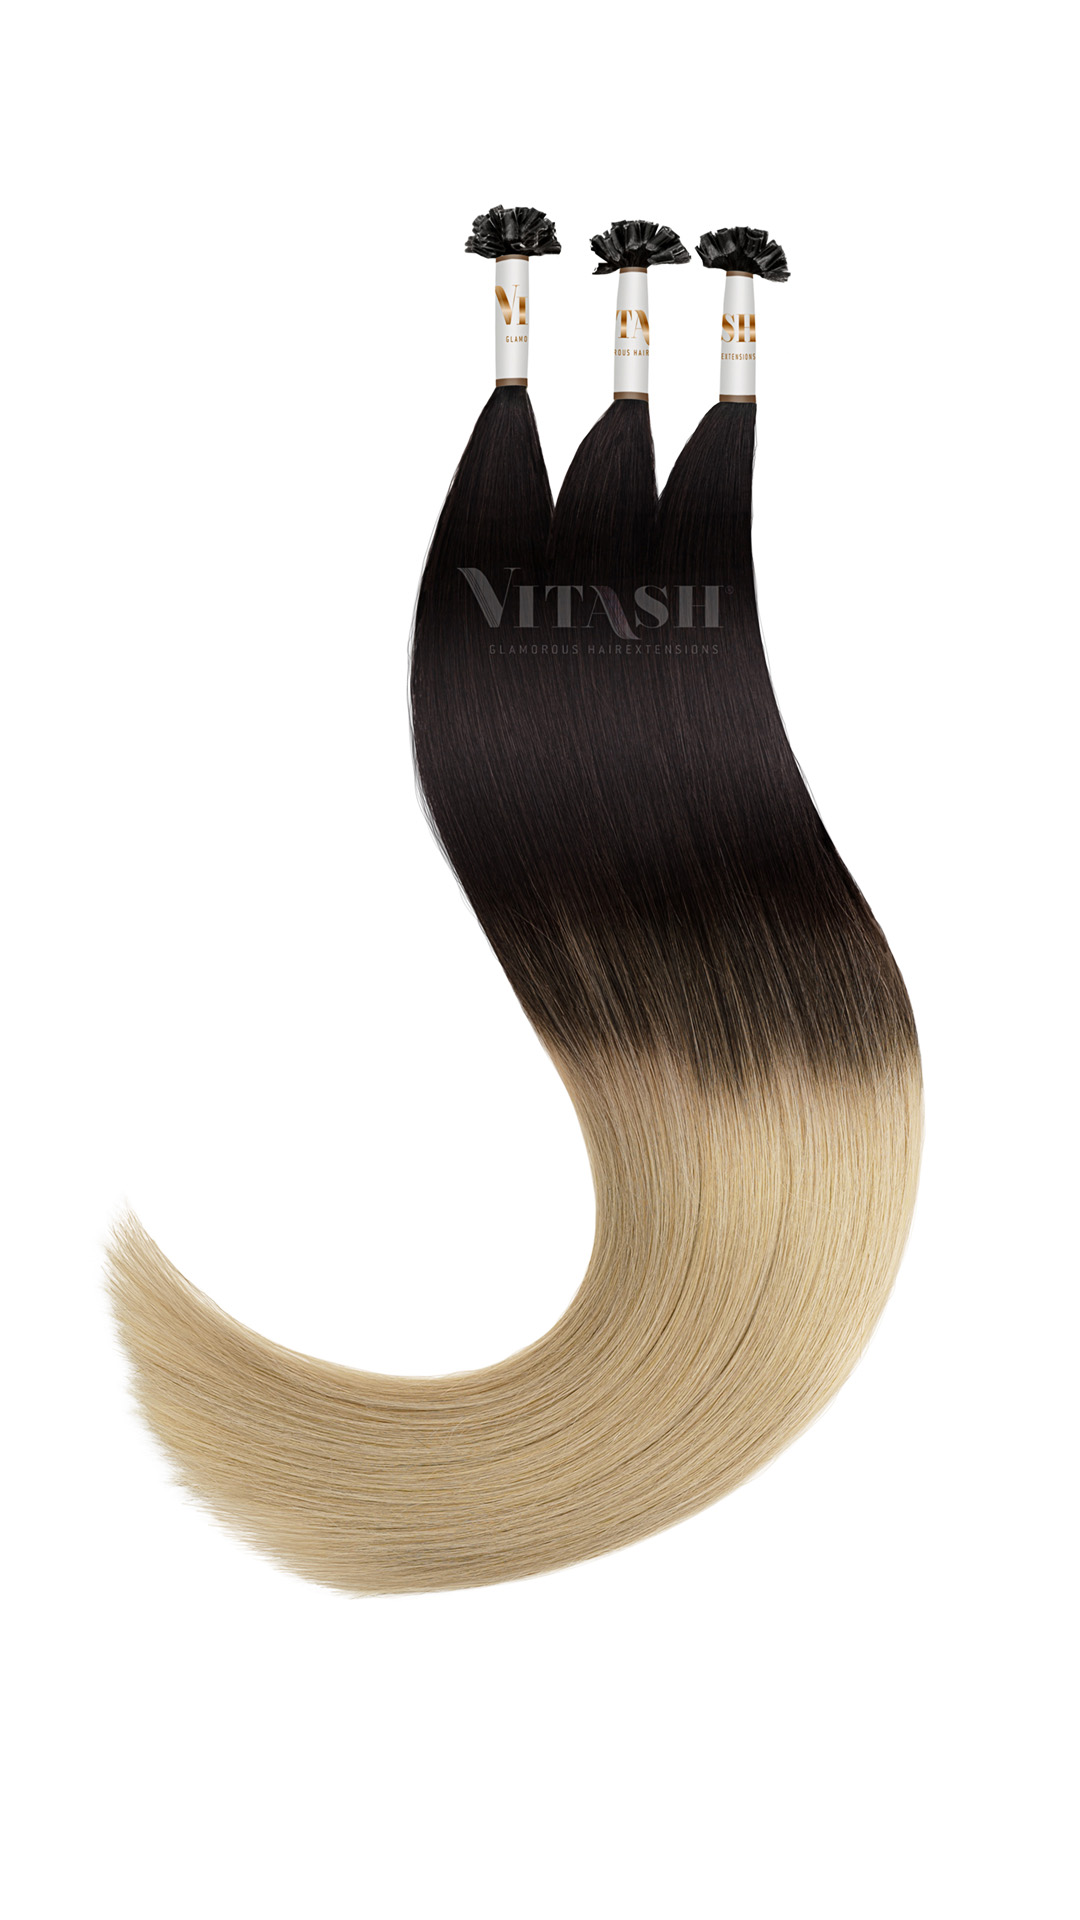 Vitash 25 Keratin Bonding strähnen | Haarverlaengerung | Extensions | Farbe #Ombre Schwarzbraun Hellblond | 55cm